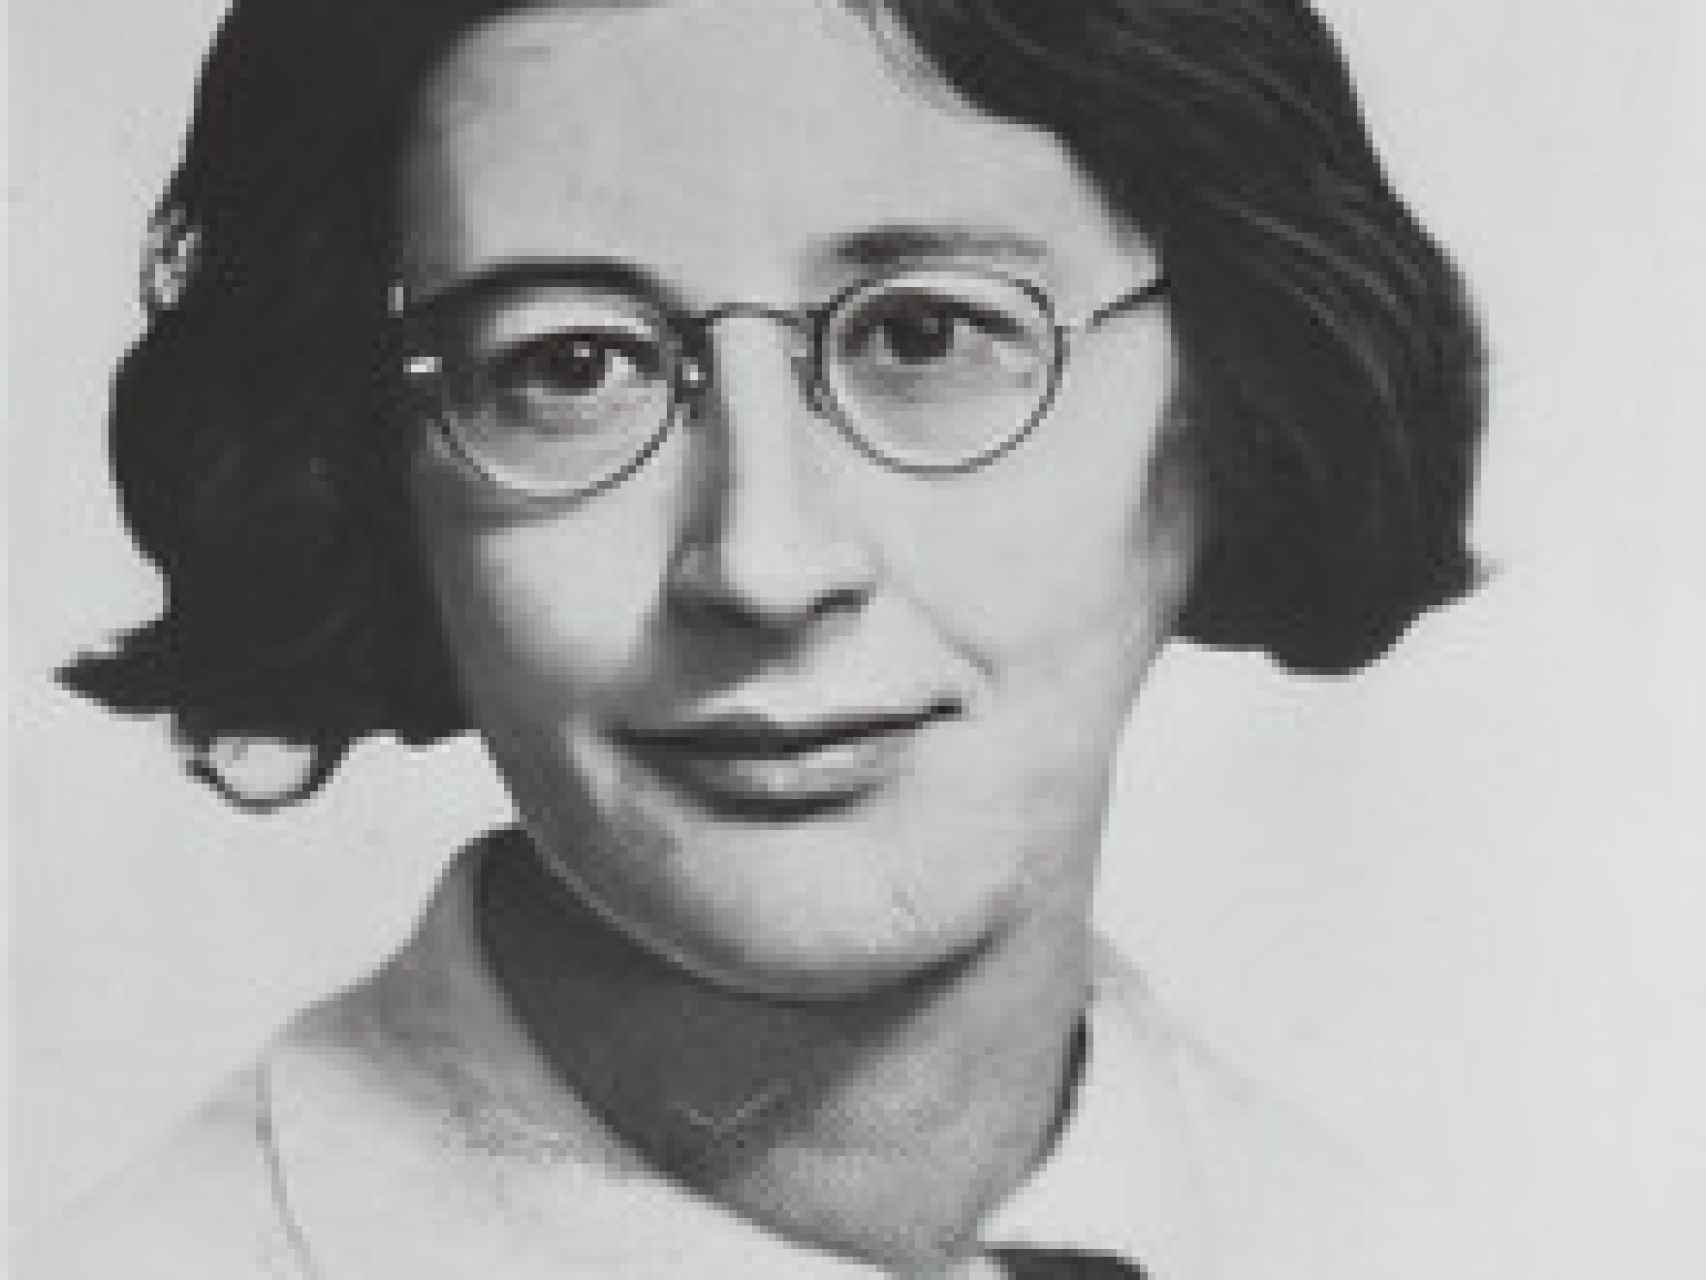 La filósofa Simone Weil